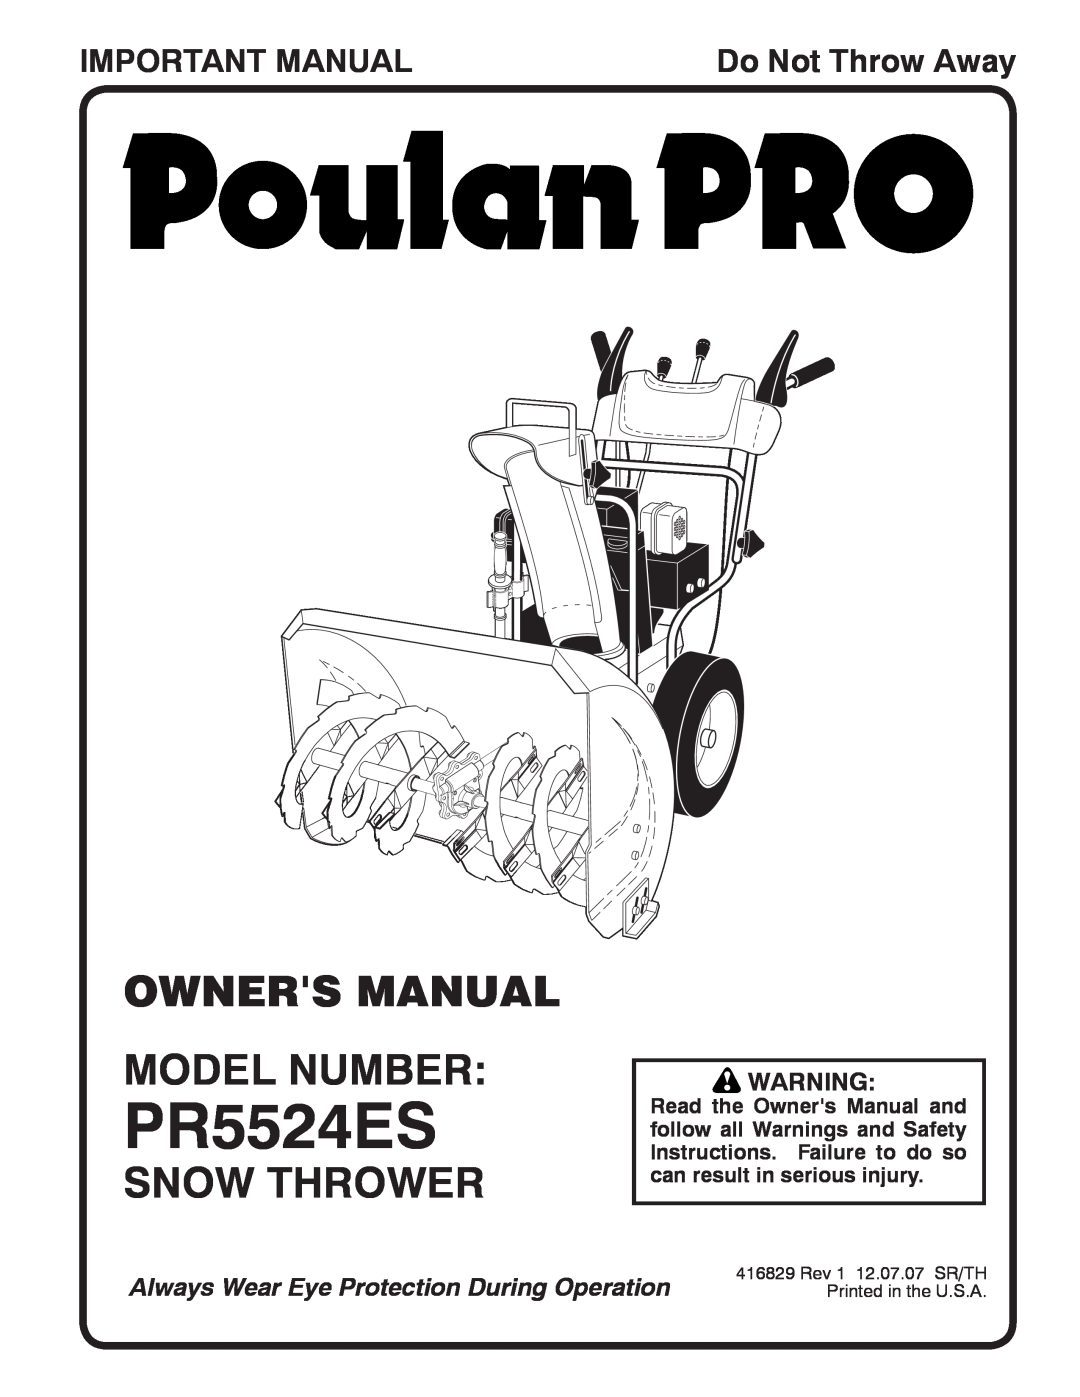 Poulan 416829 owner manual Snow Thrower, Important Manual, PR5524ES, Do Not Throw Away 